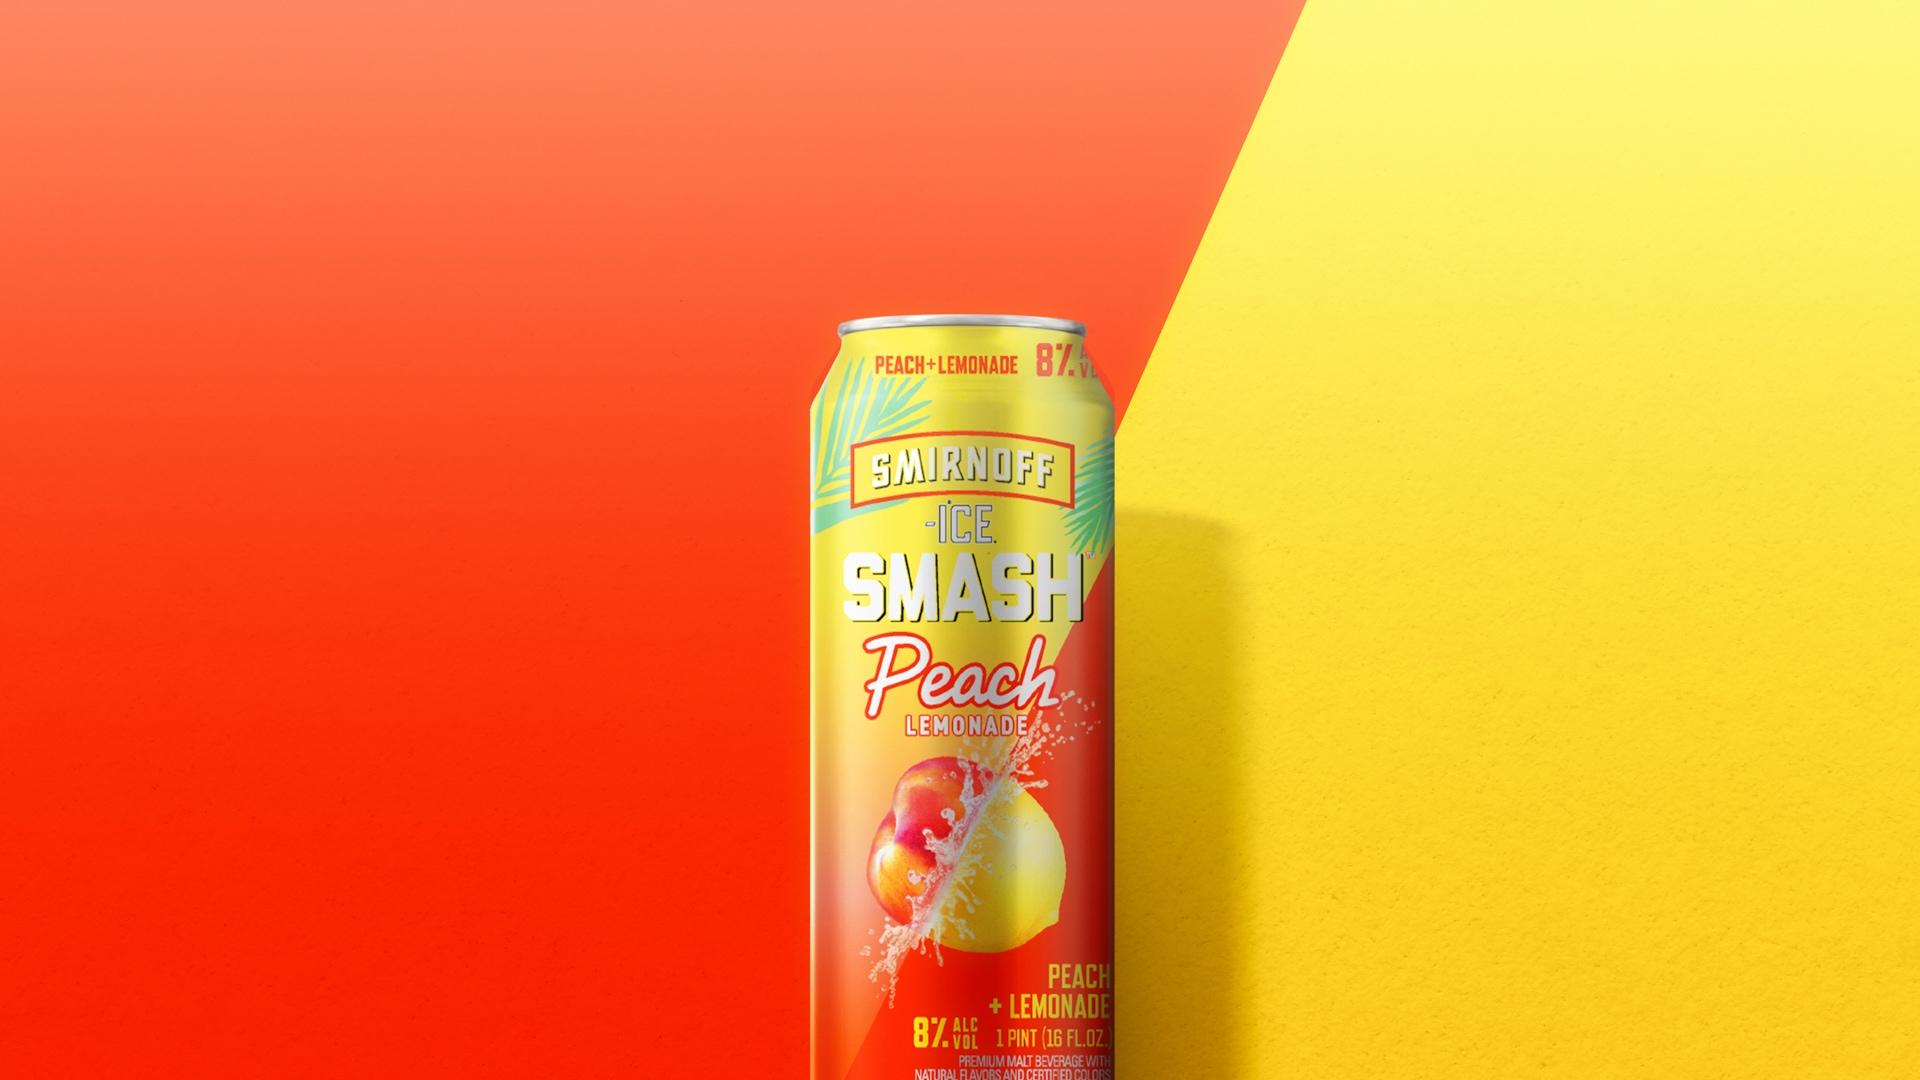 Smirnoff Ice Smash Peach Lemonade on a dual colored background